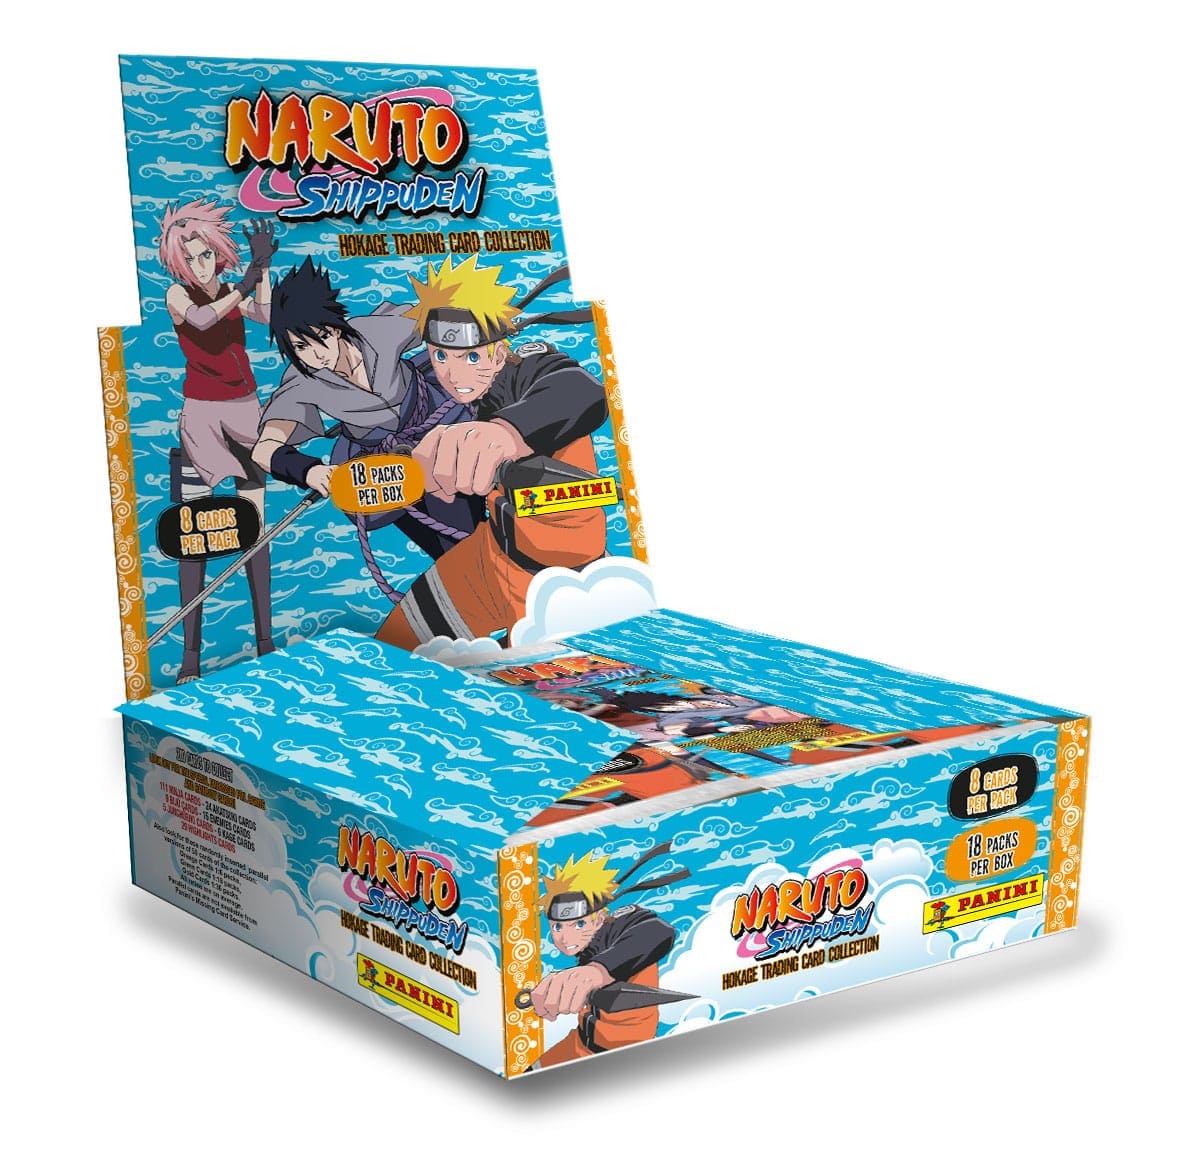 NordicDice Naruto Naruto Shippuden Hokage Trading Card Collection Flow Packs Display (18) *English Version*